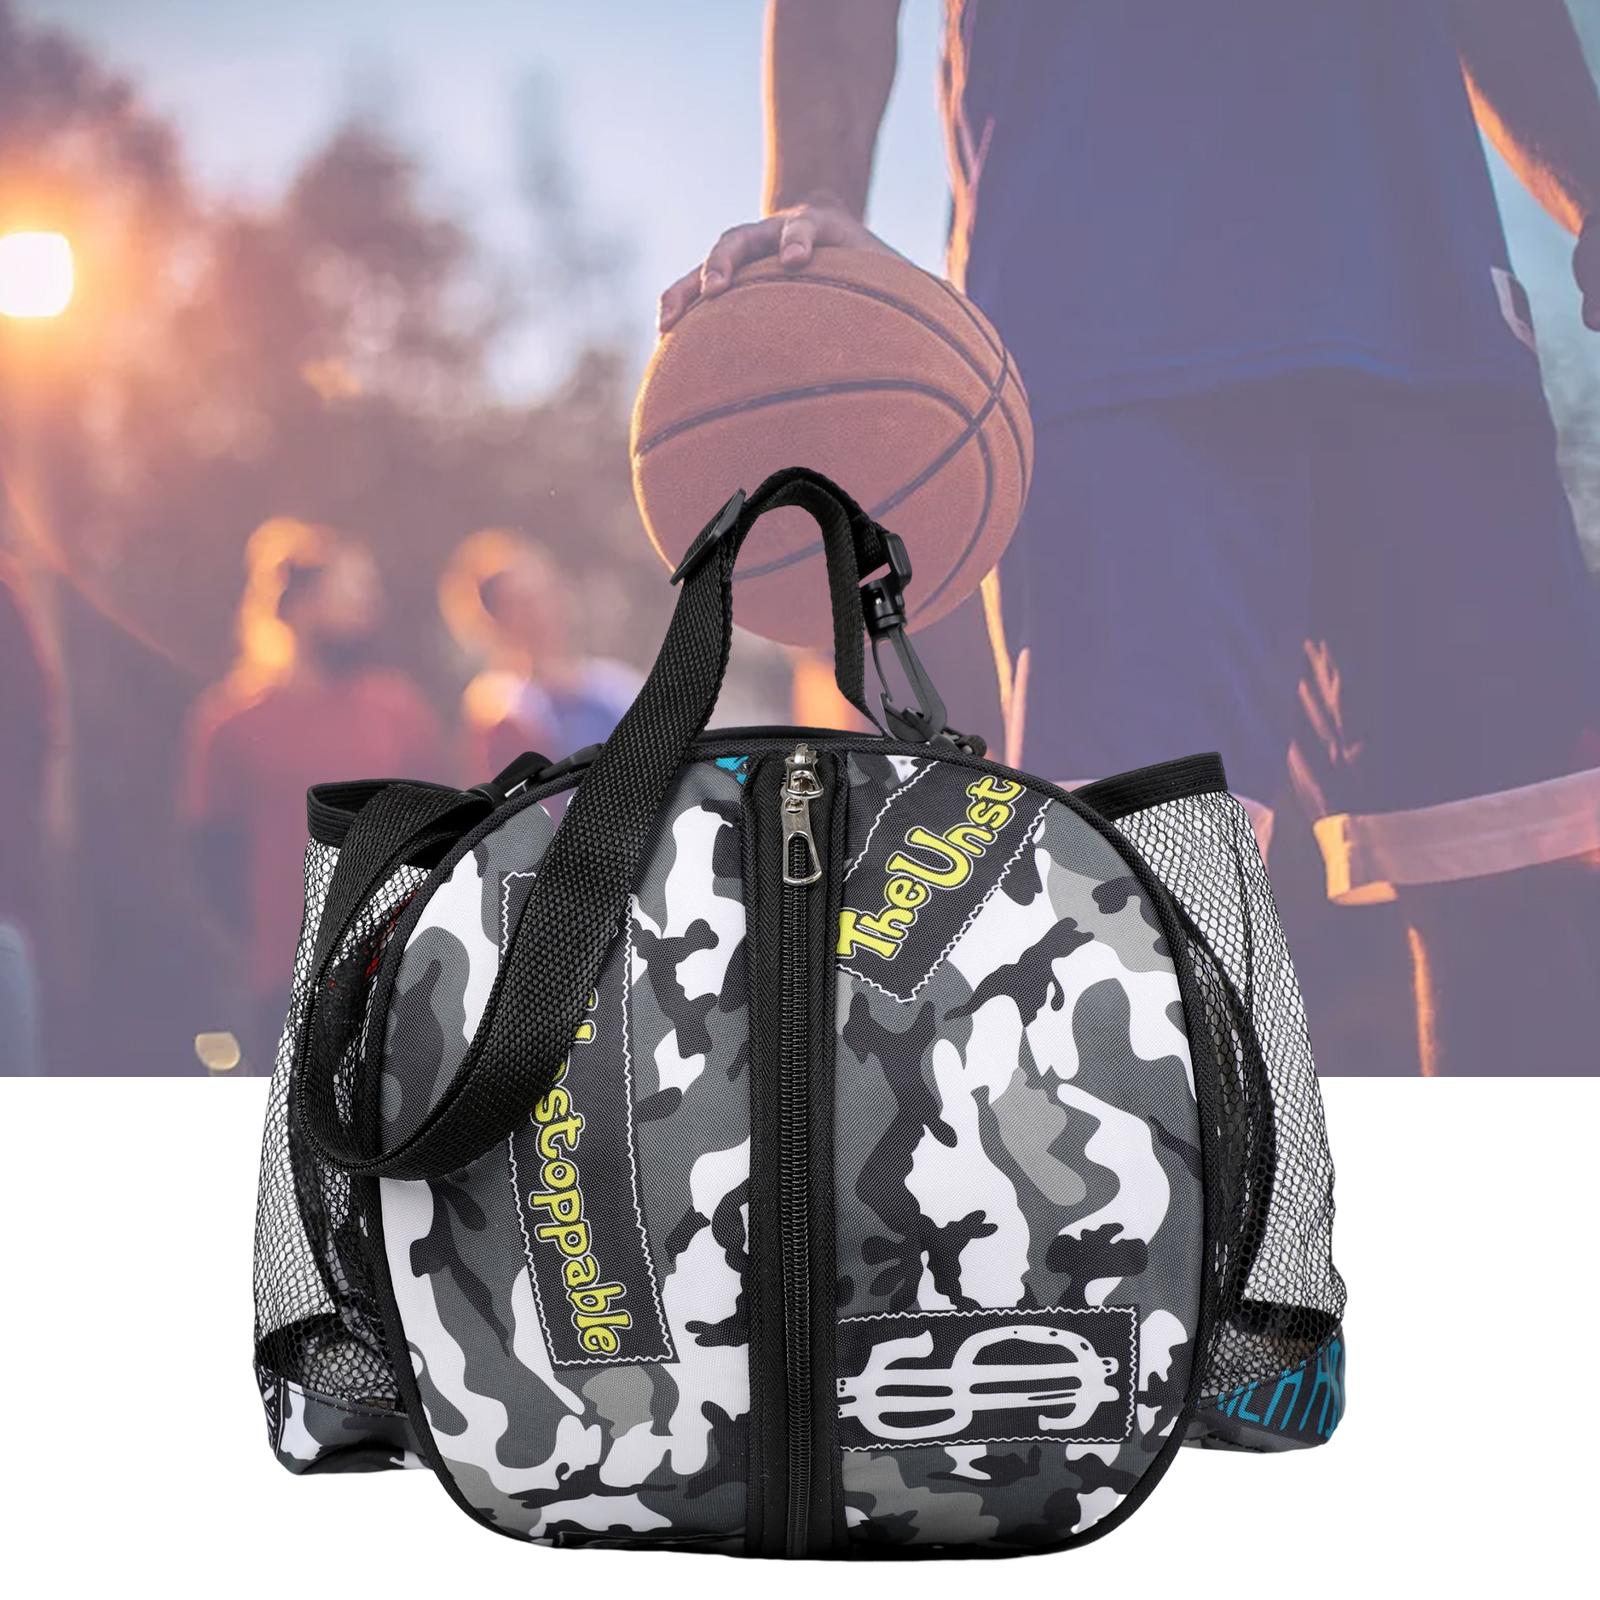 Basketball Bag Backpack Lightweight Soccer Waterproof for Football Men Women Gray Shoulder Bags